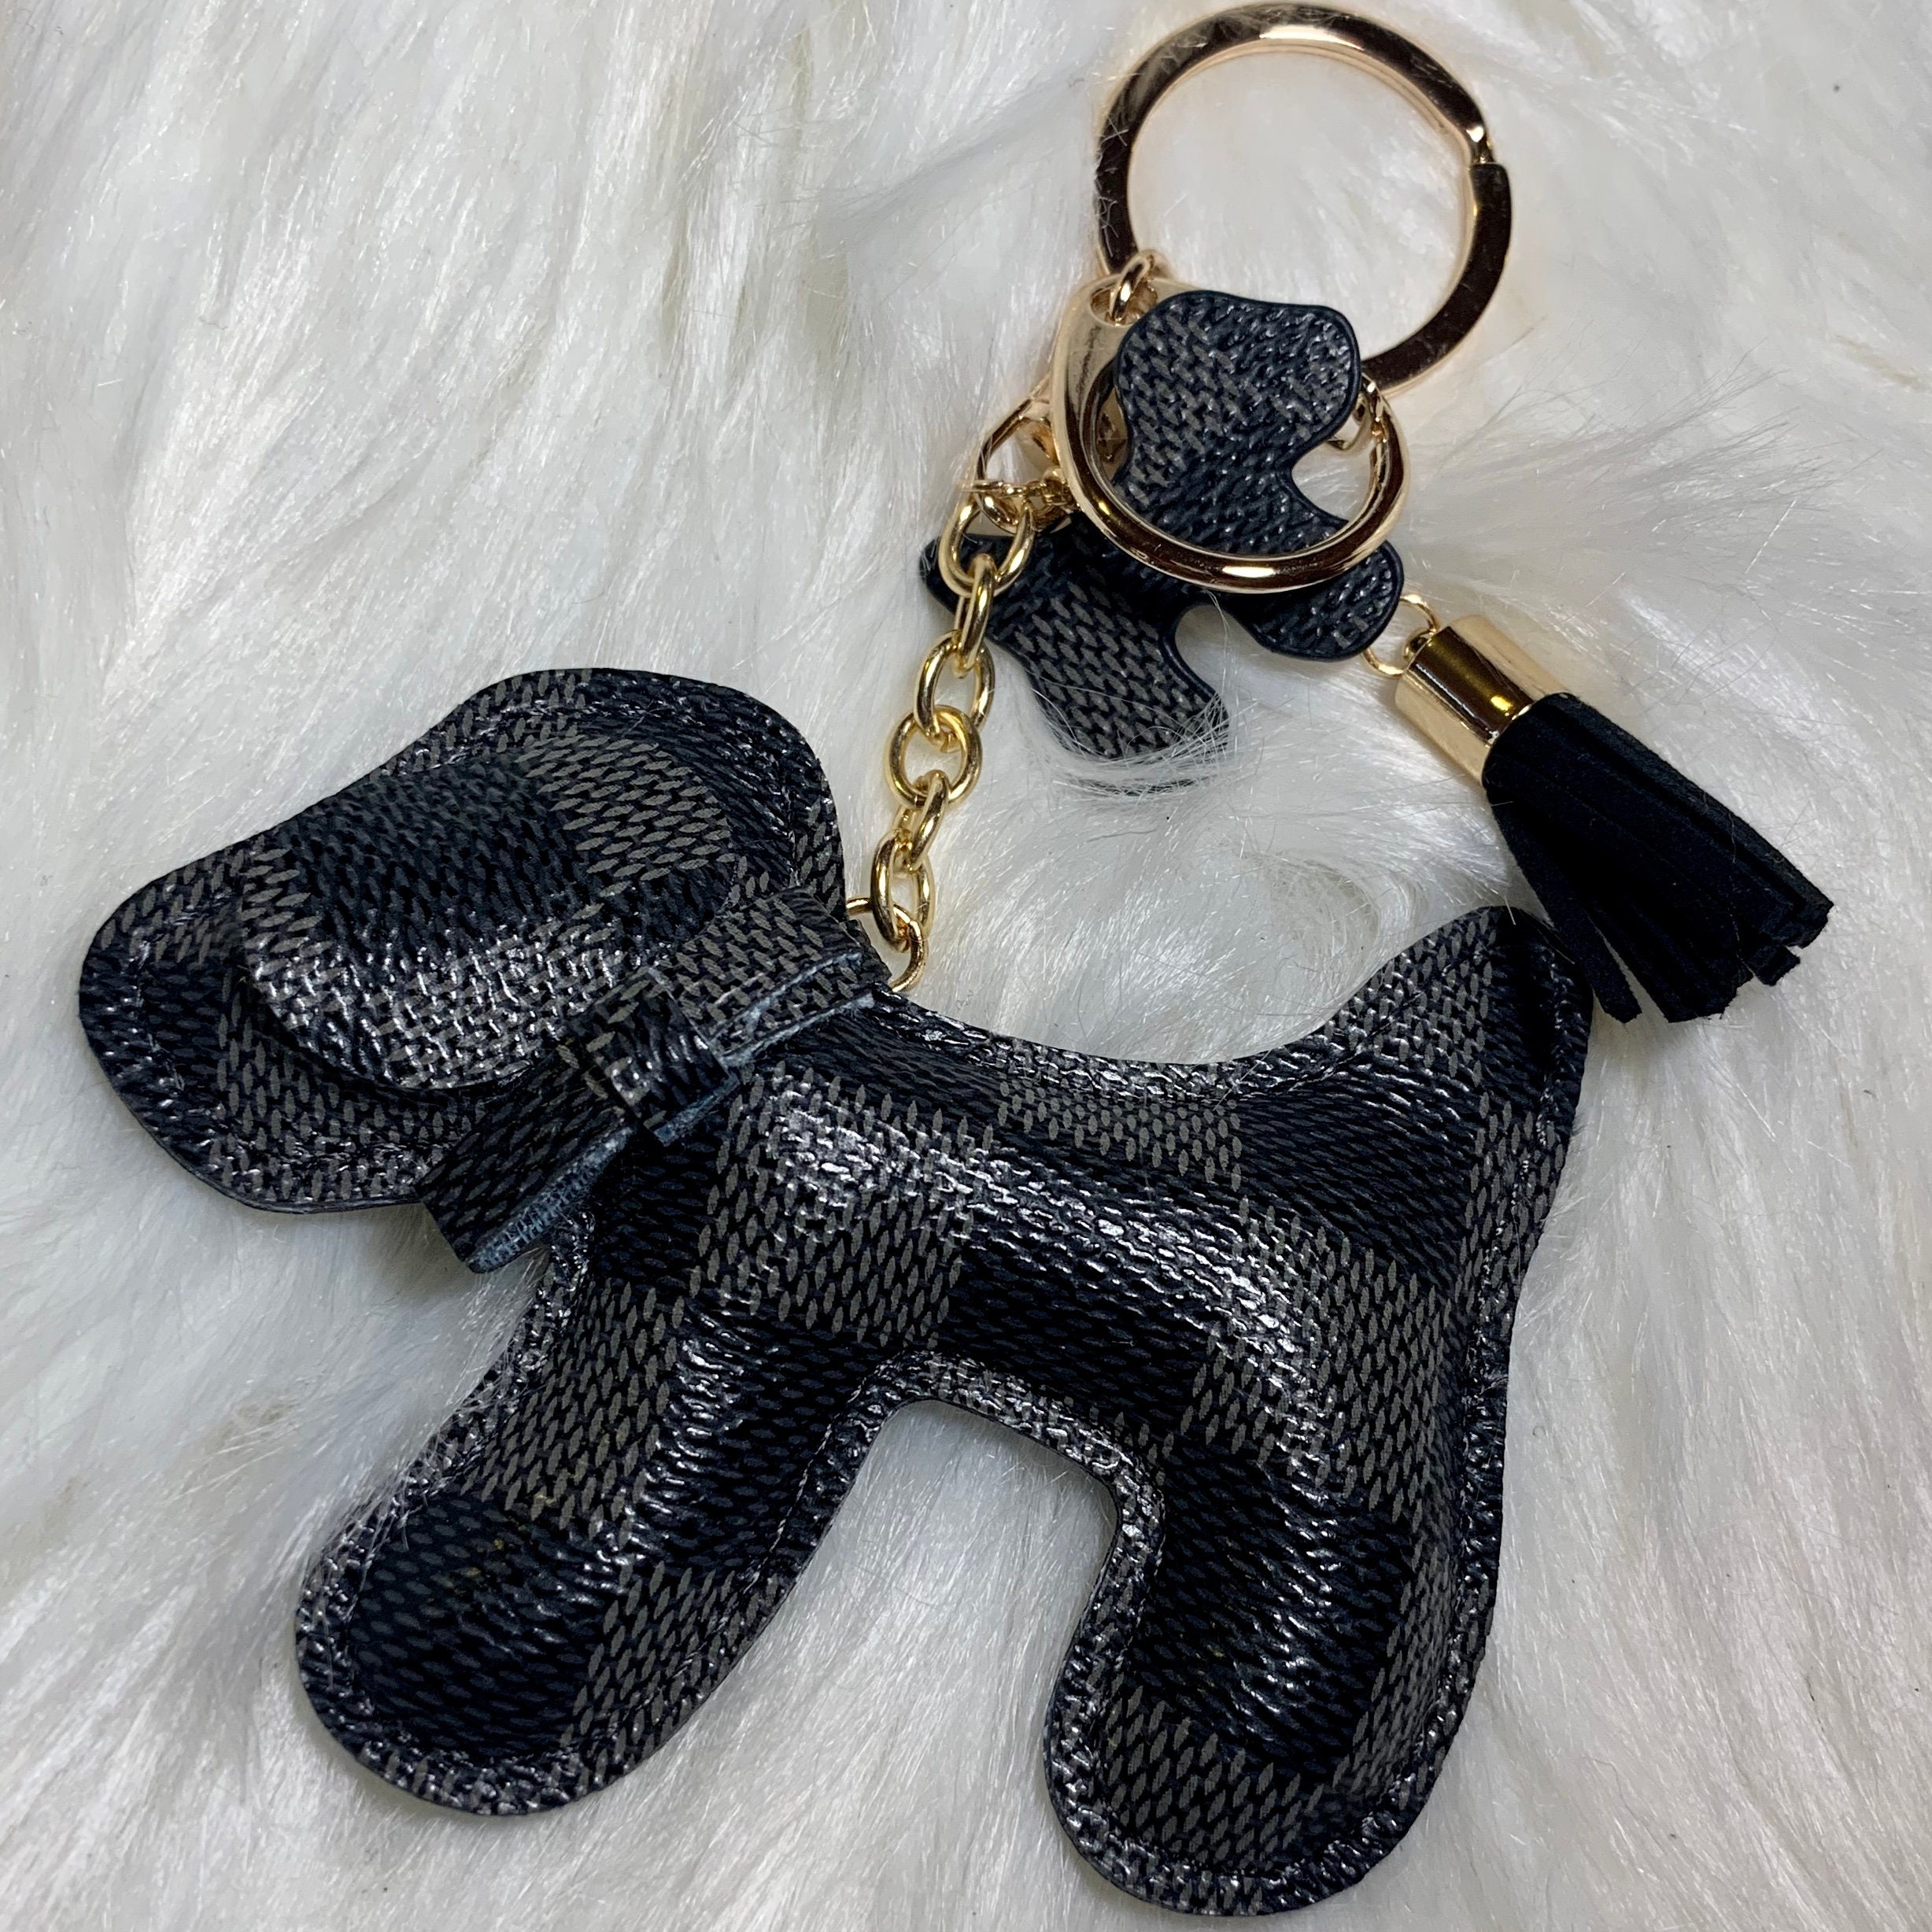 PU Leather Luxury Fashion Brown and Gold Pattern Dog Golden Retriever  Animal Keychain Tassel Purse Accessory Gift Women & Cute High Quality